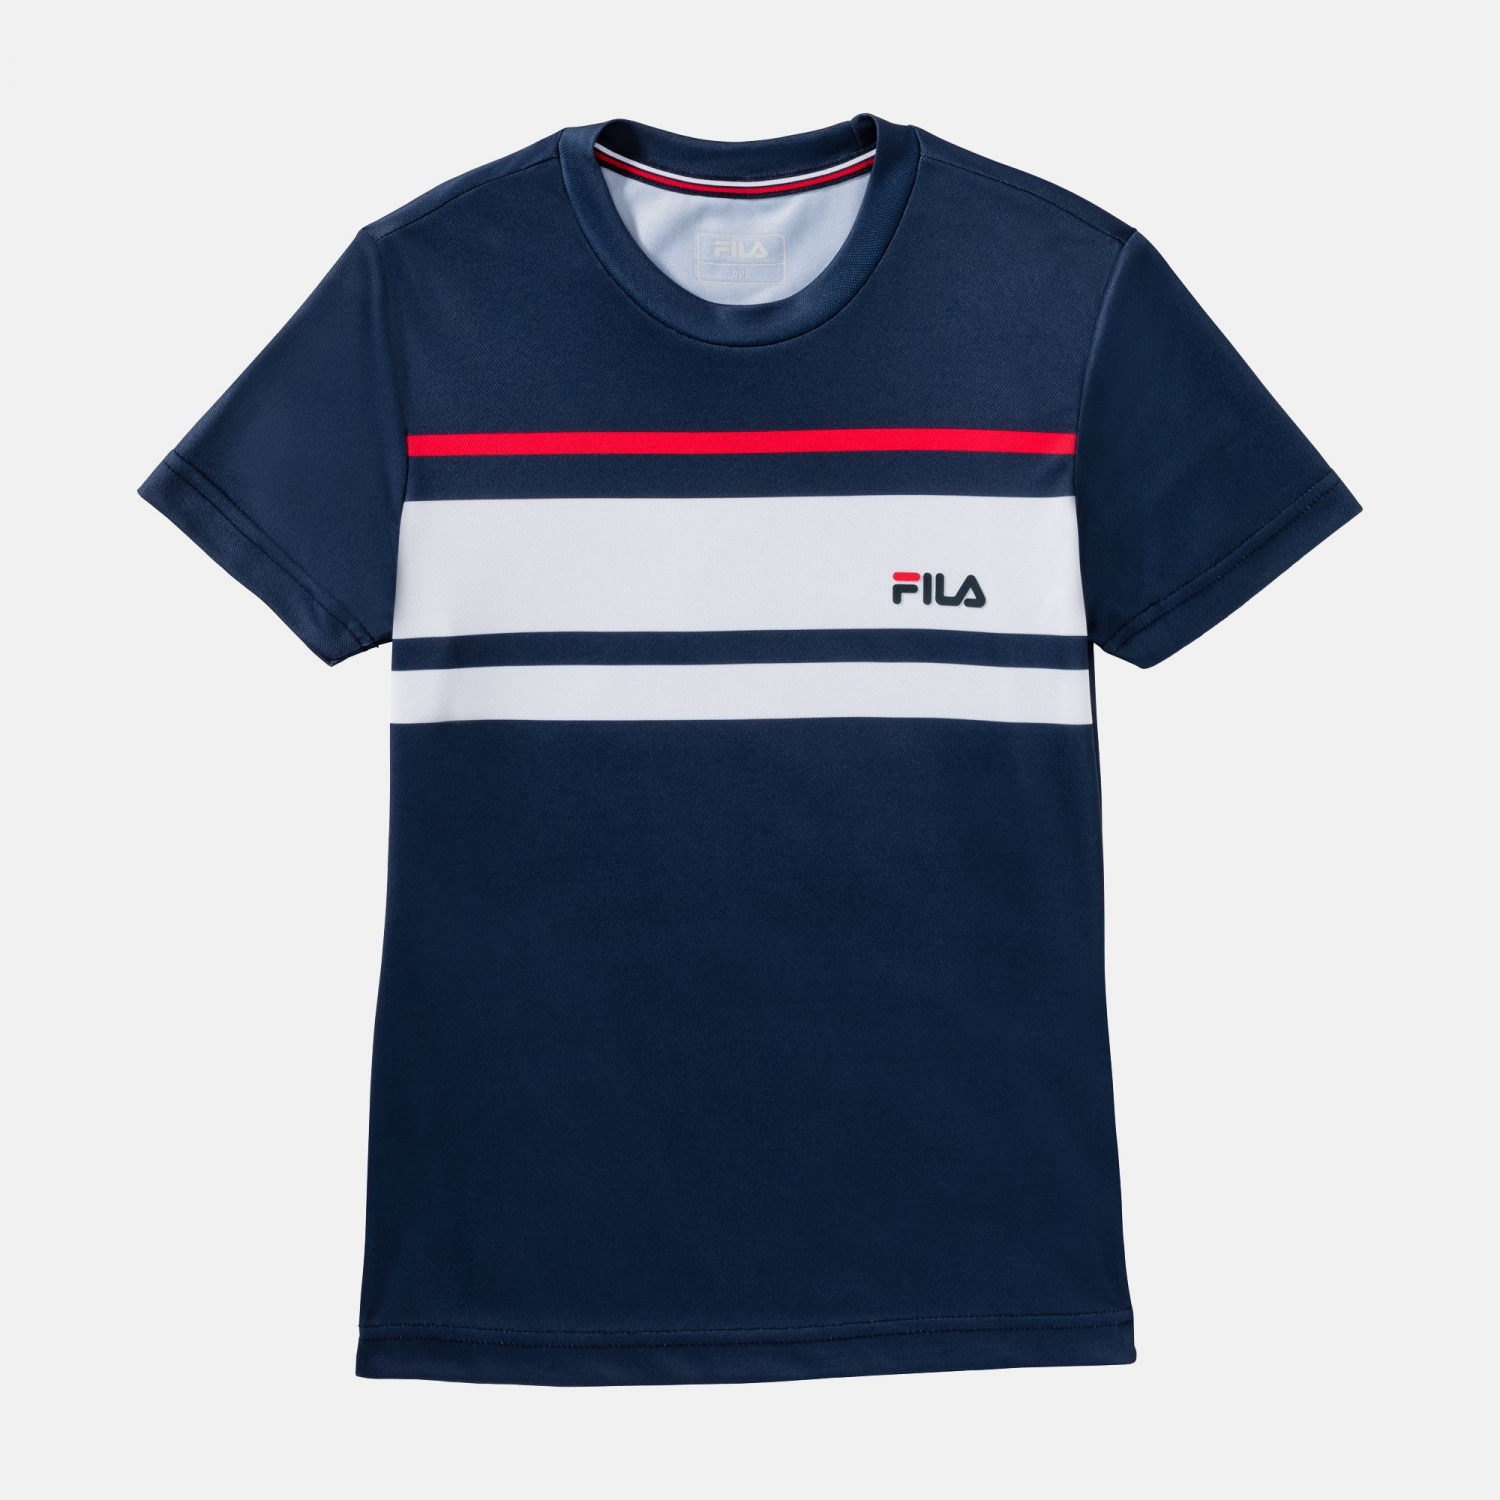 Fila T-Shirt Trey Boys - dark blue | FILA Official